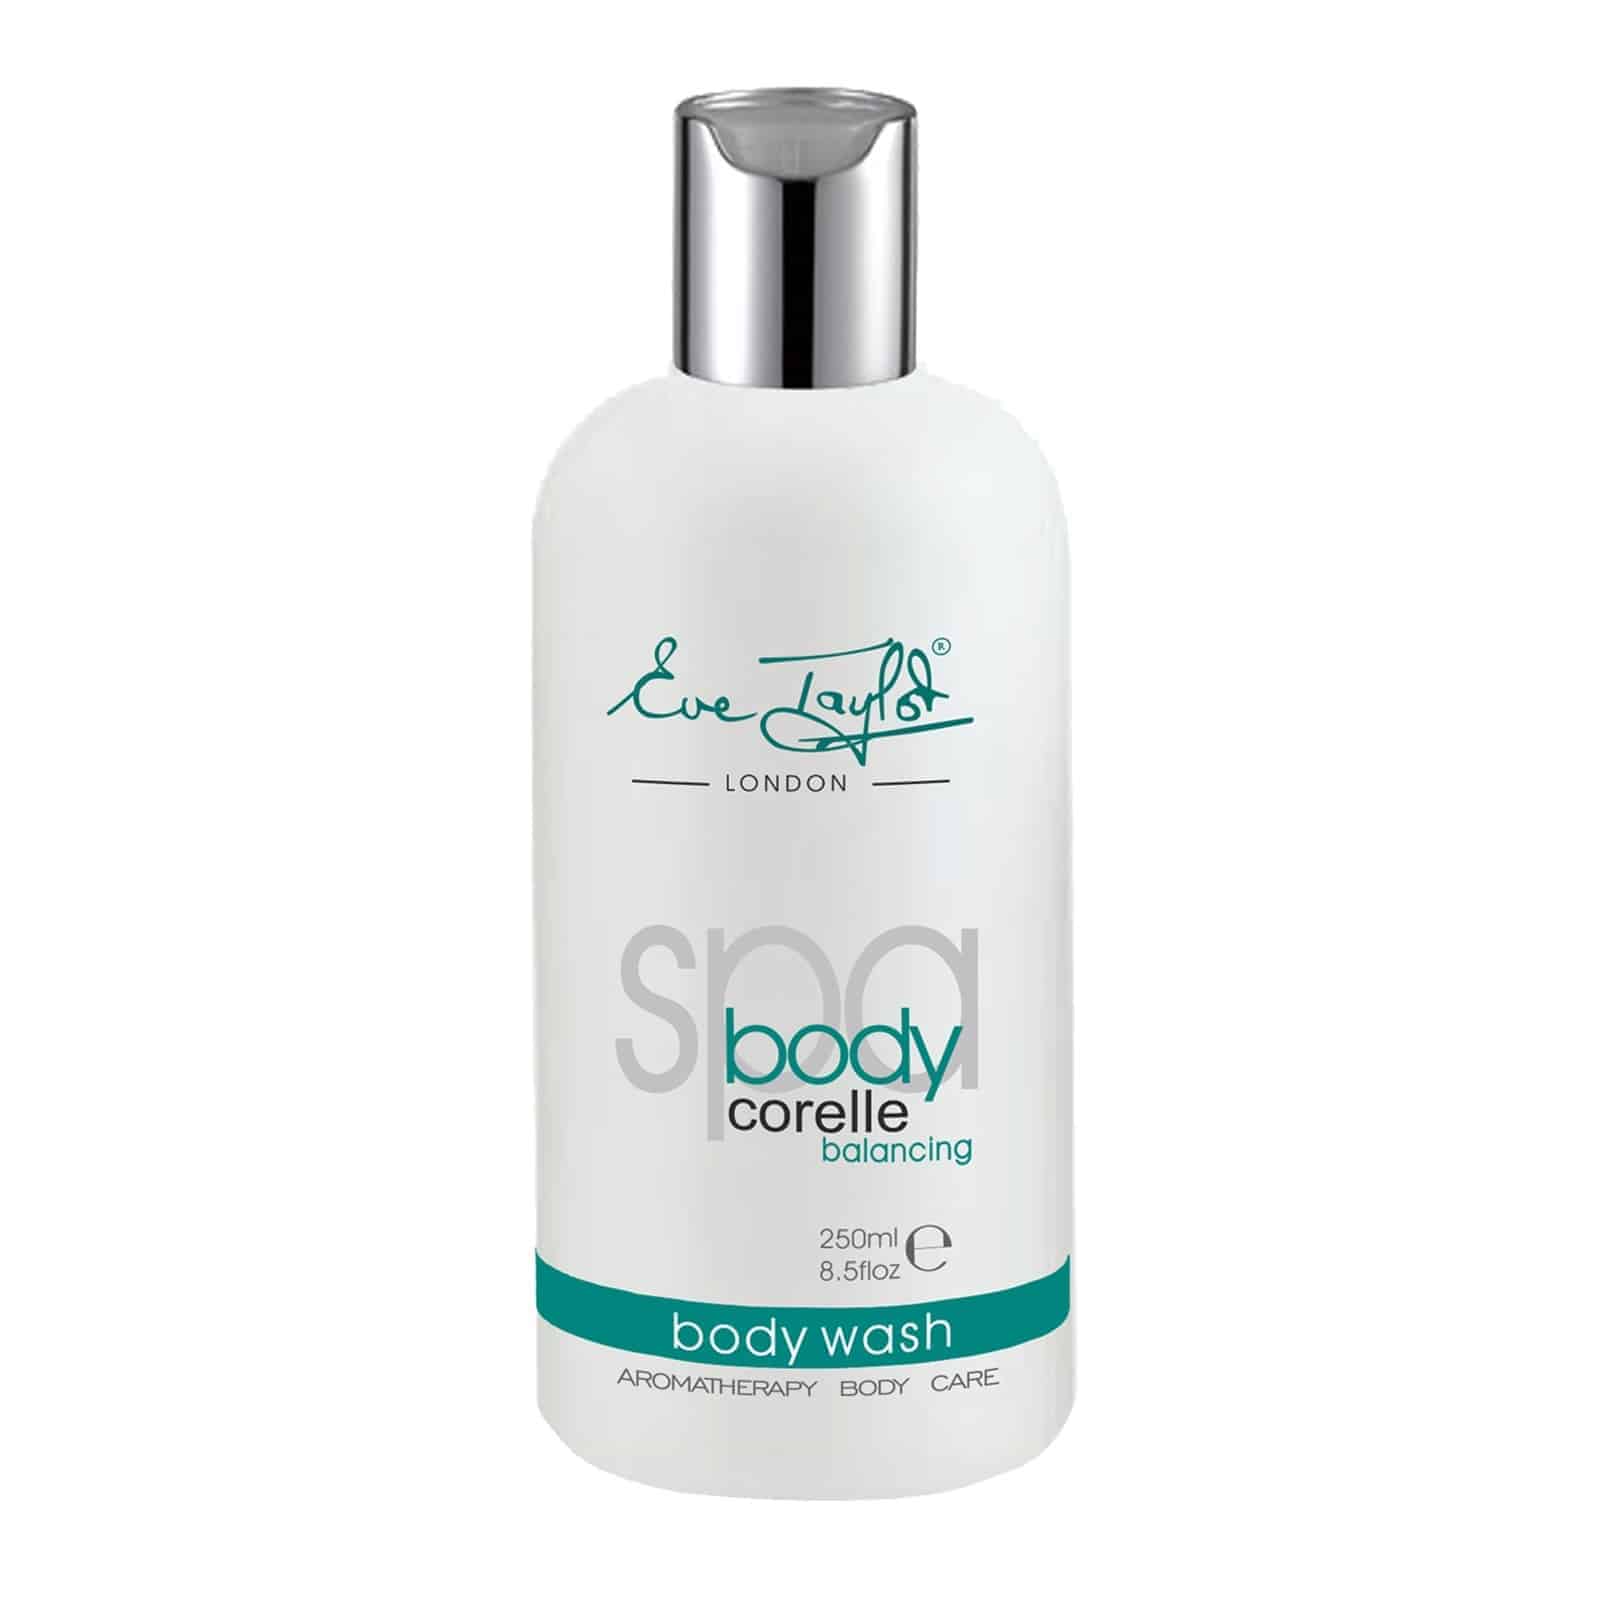 Corelle body wash/shower gel 250ml